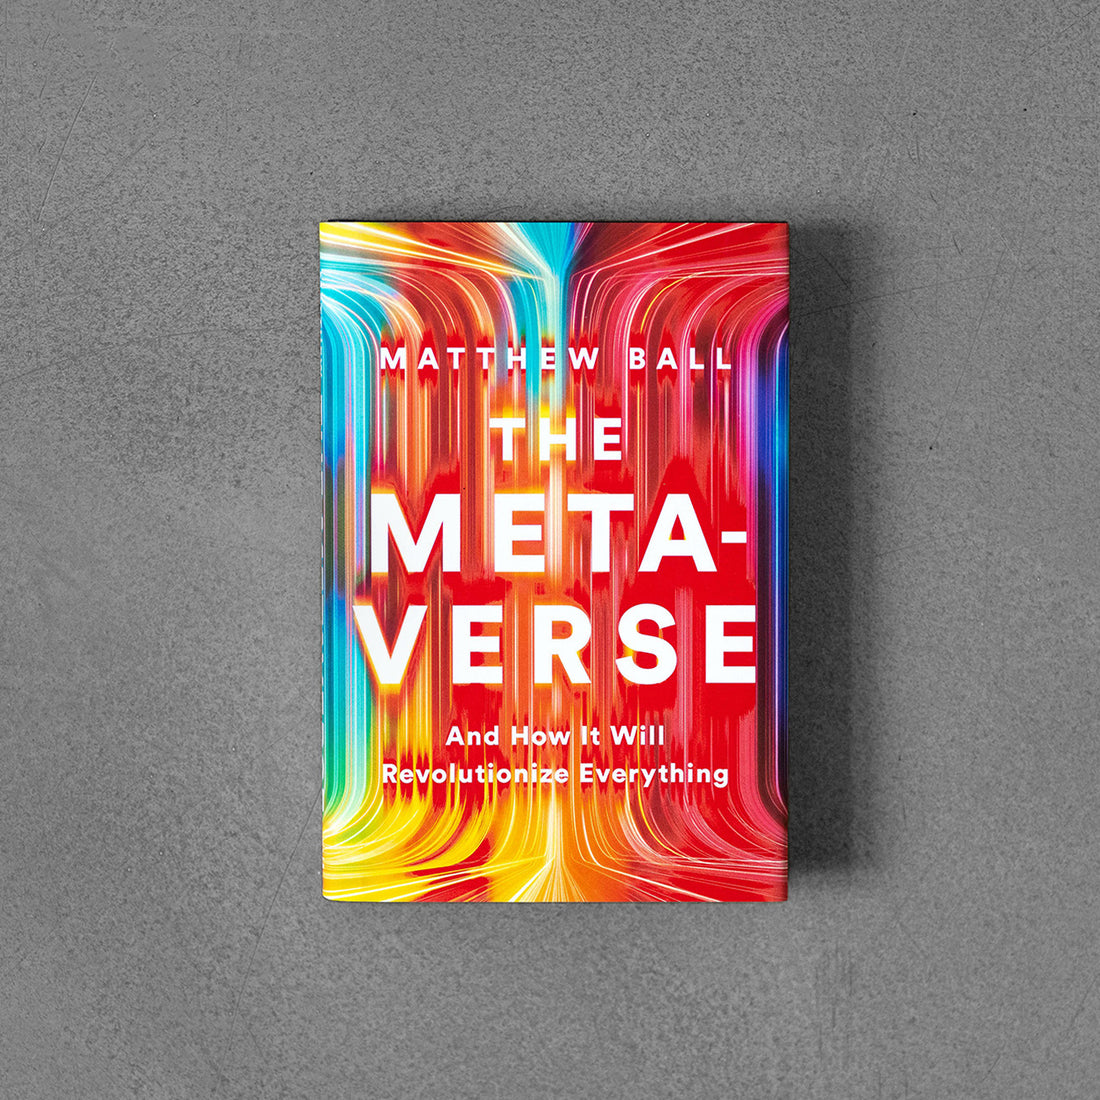 Metaverse – Matthew Ball